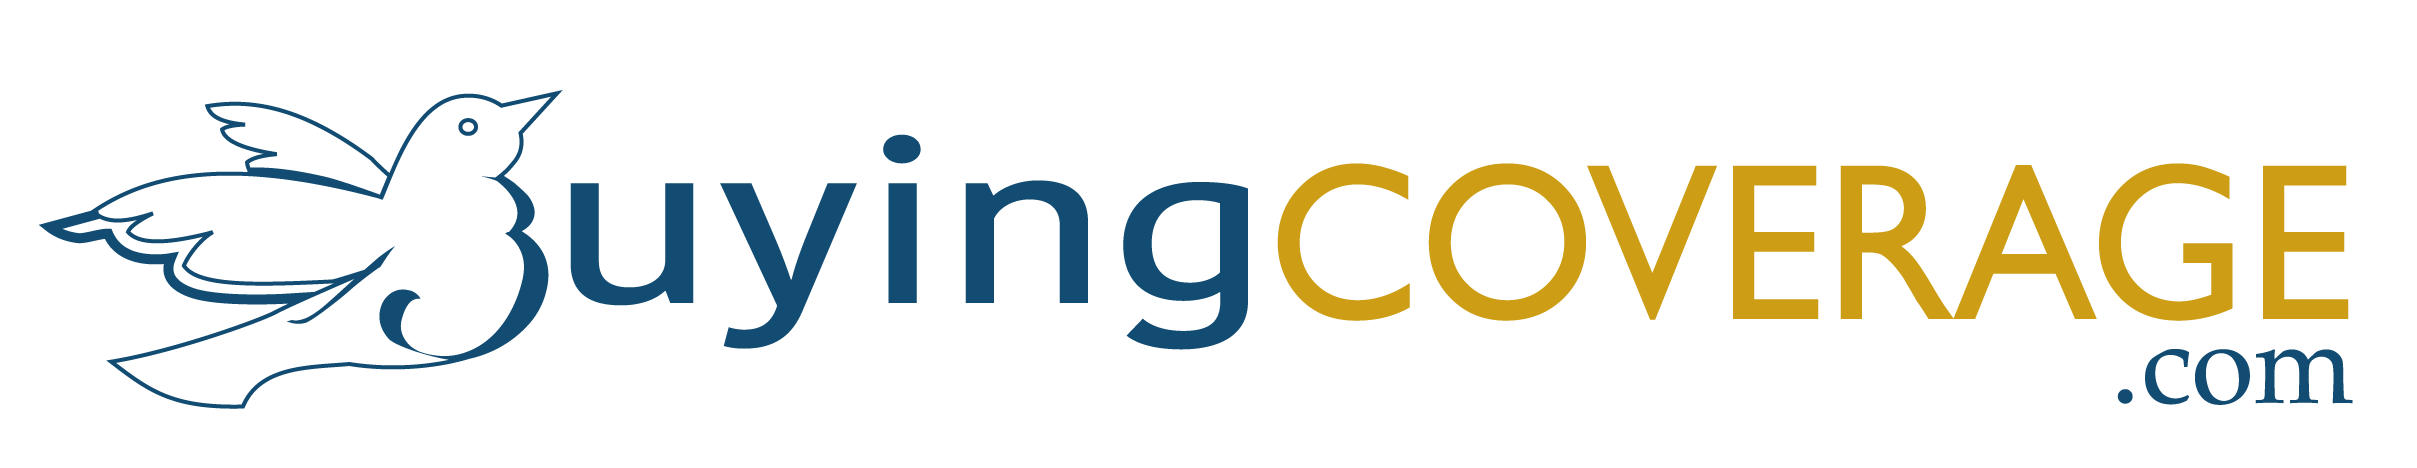 Buying Coverage Logo